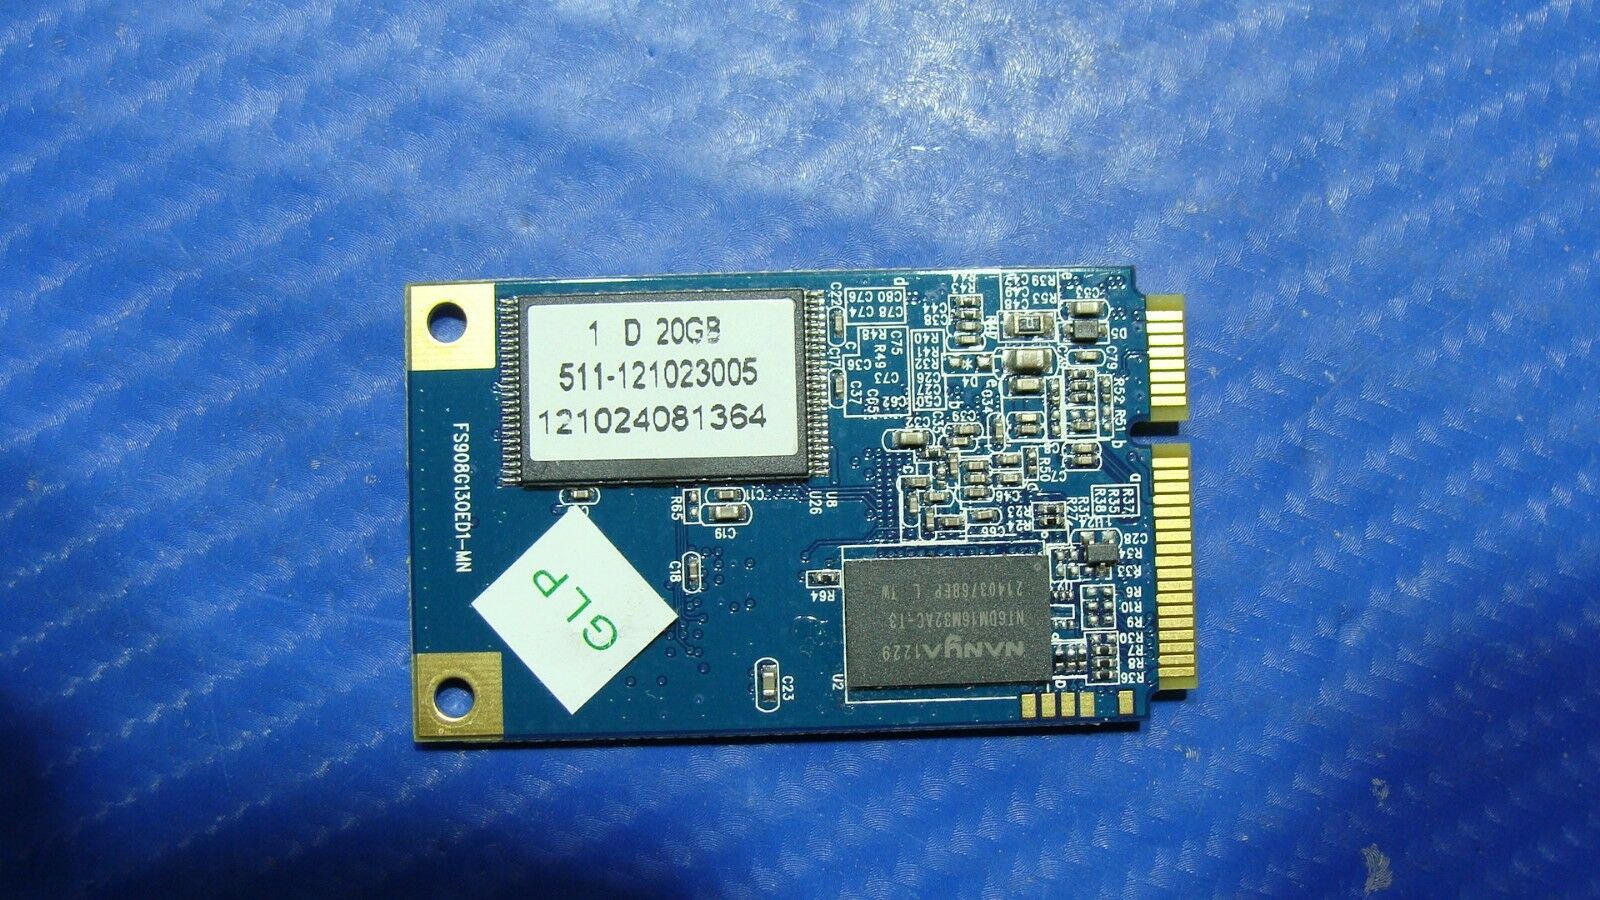 Acer Aspire M5-481PT-6644 14